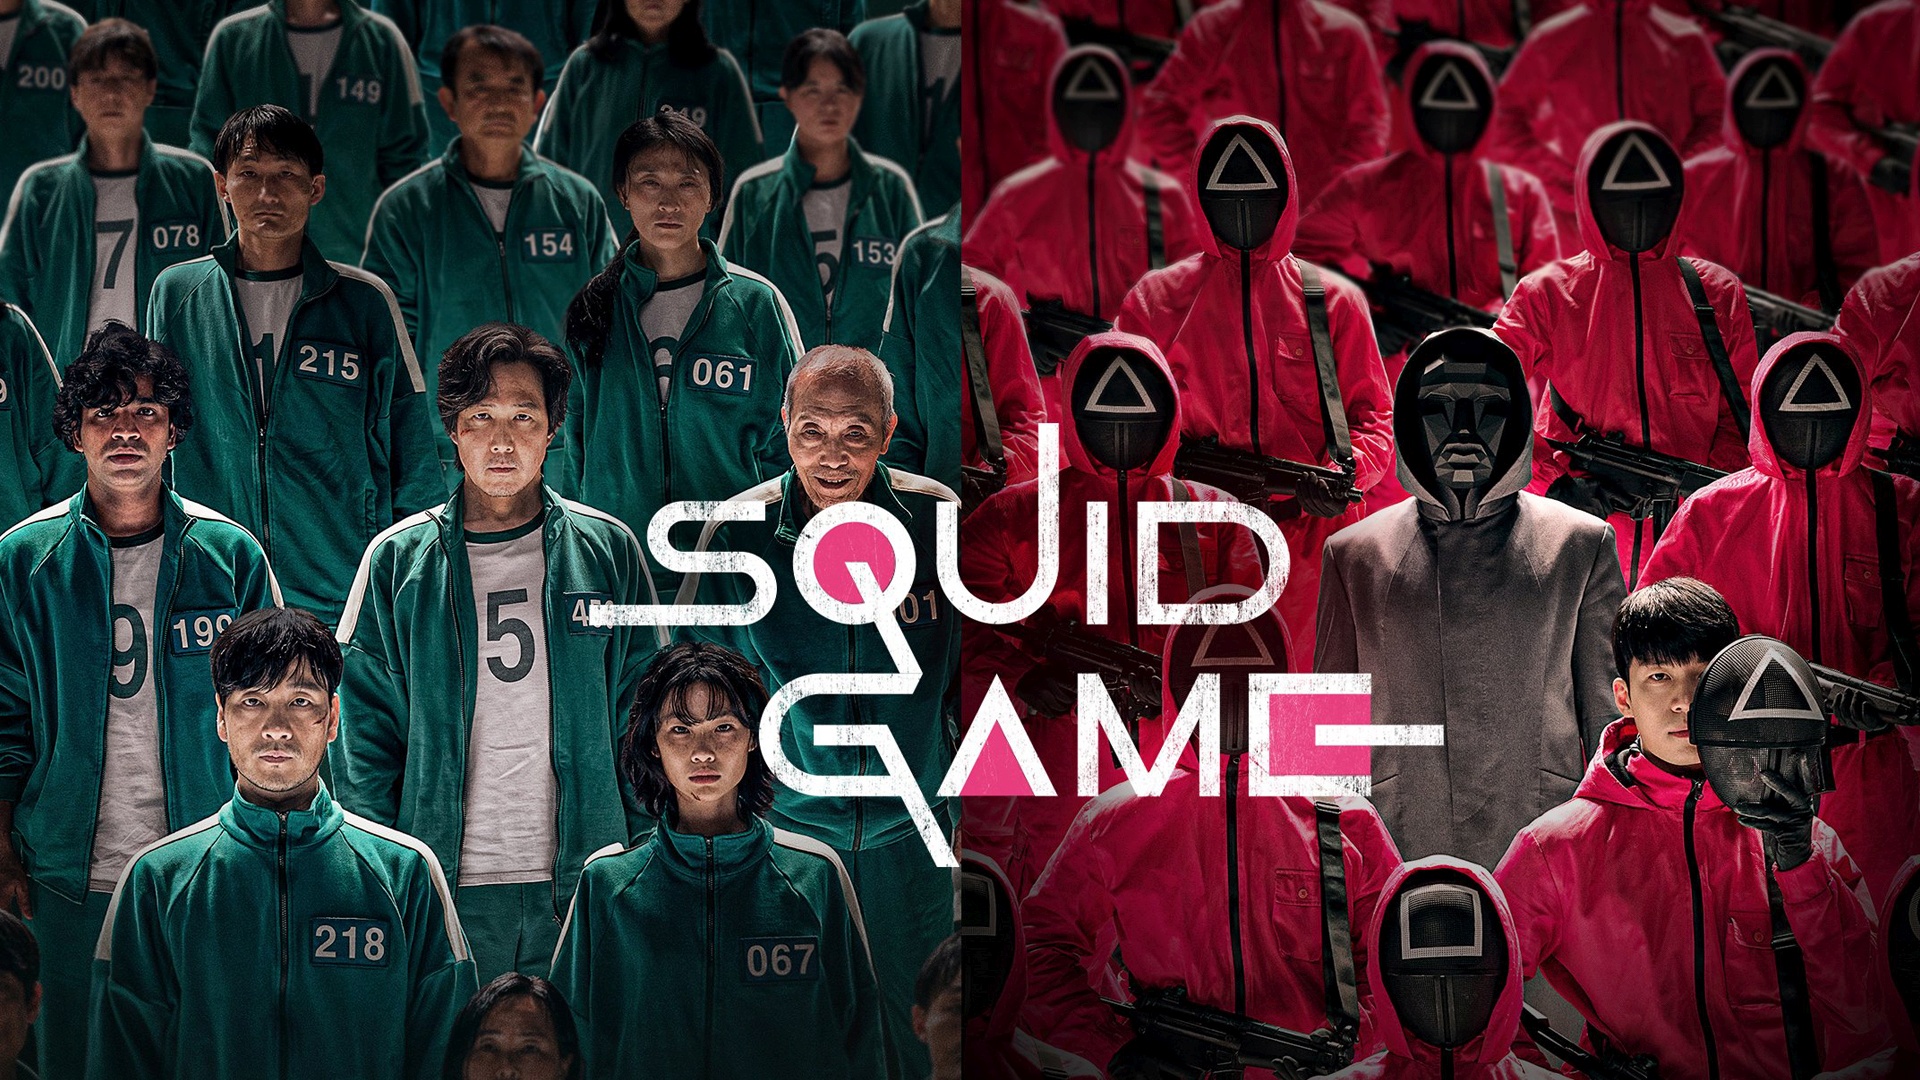 Squid game wallpaper